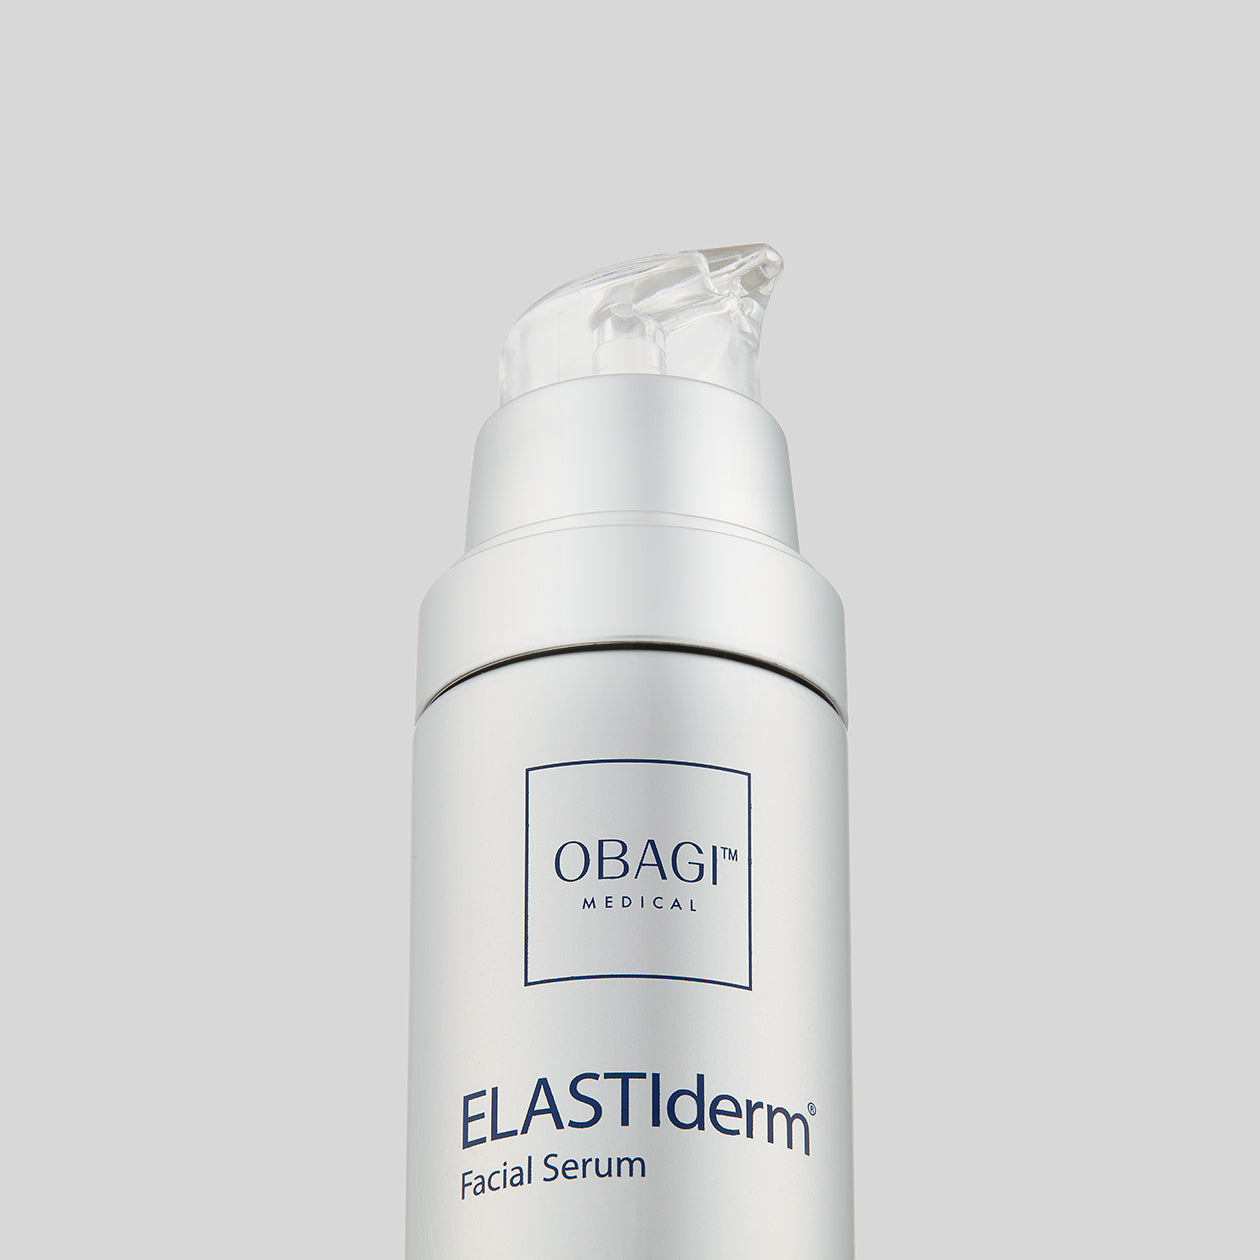 ELASTIderm®
FACIAL SERUM
Firming Facial Treatment Serum